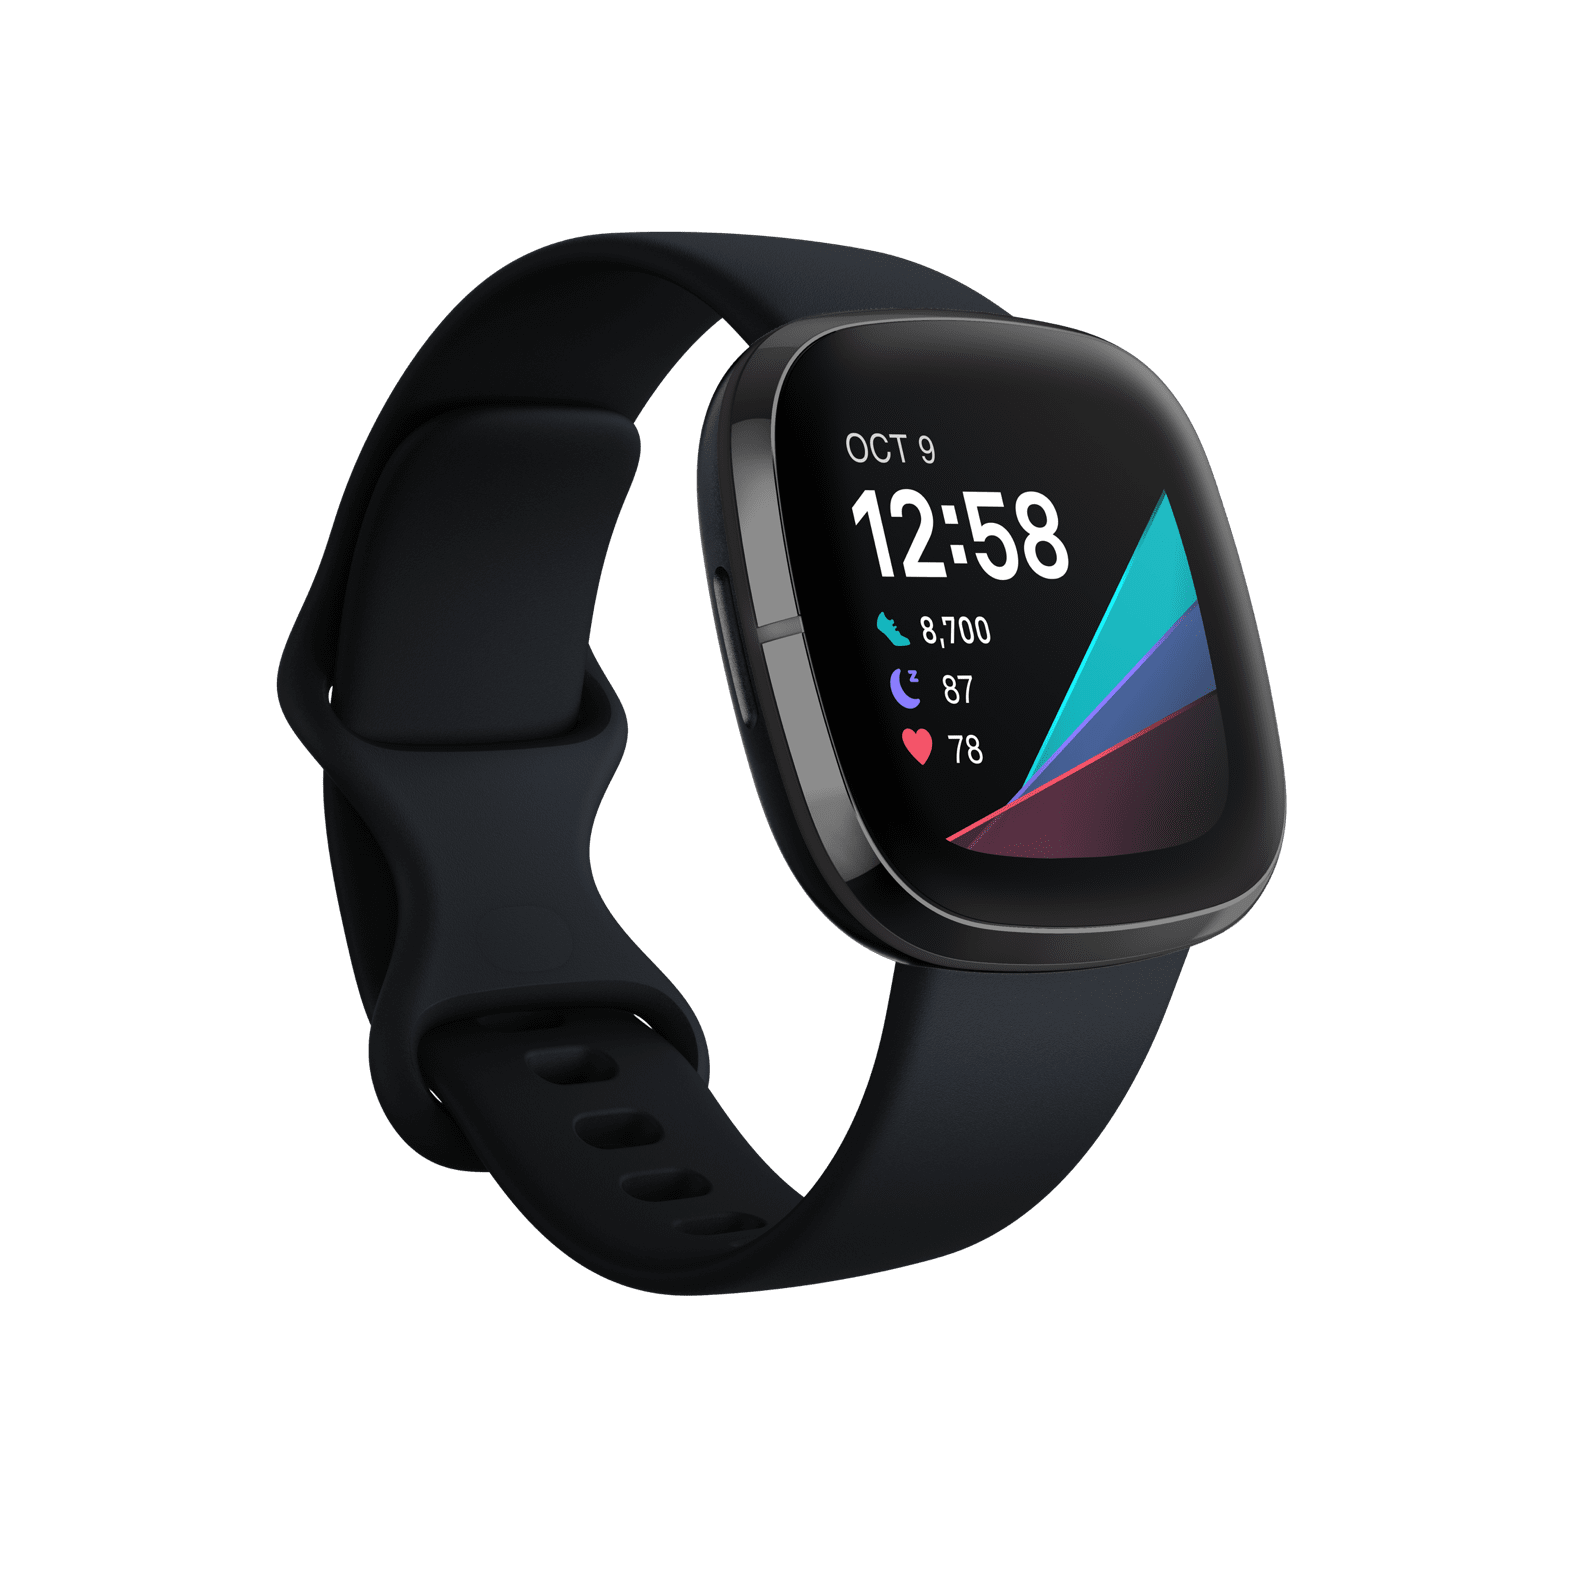 Fitbit Versa 2 Health & Fitness Watch